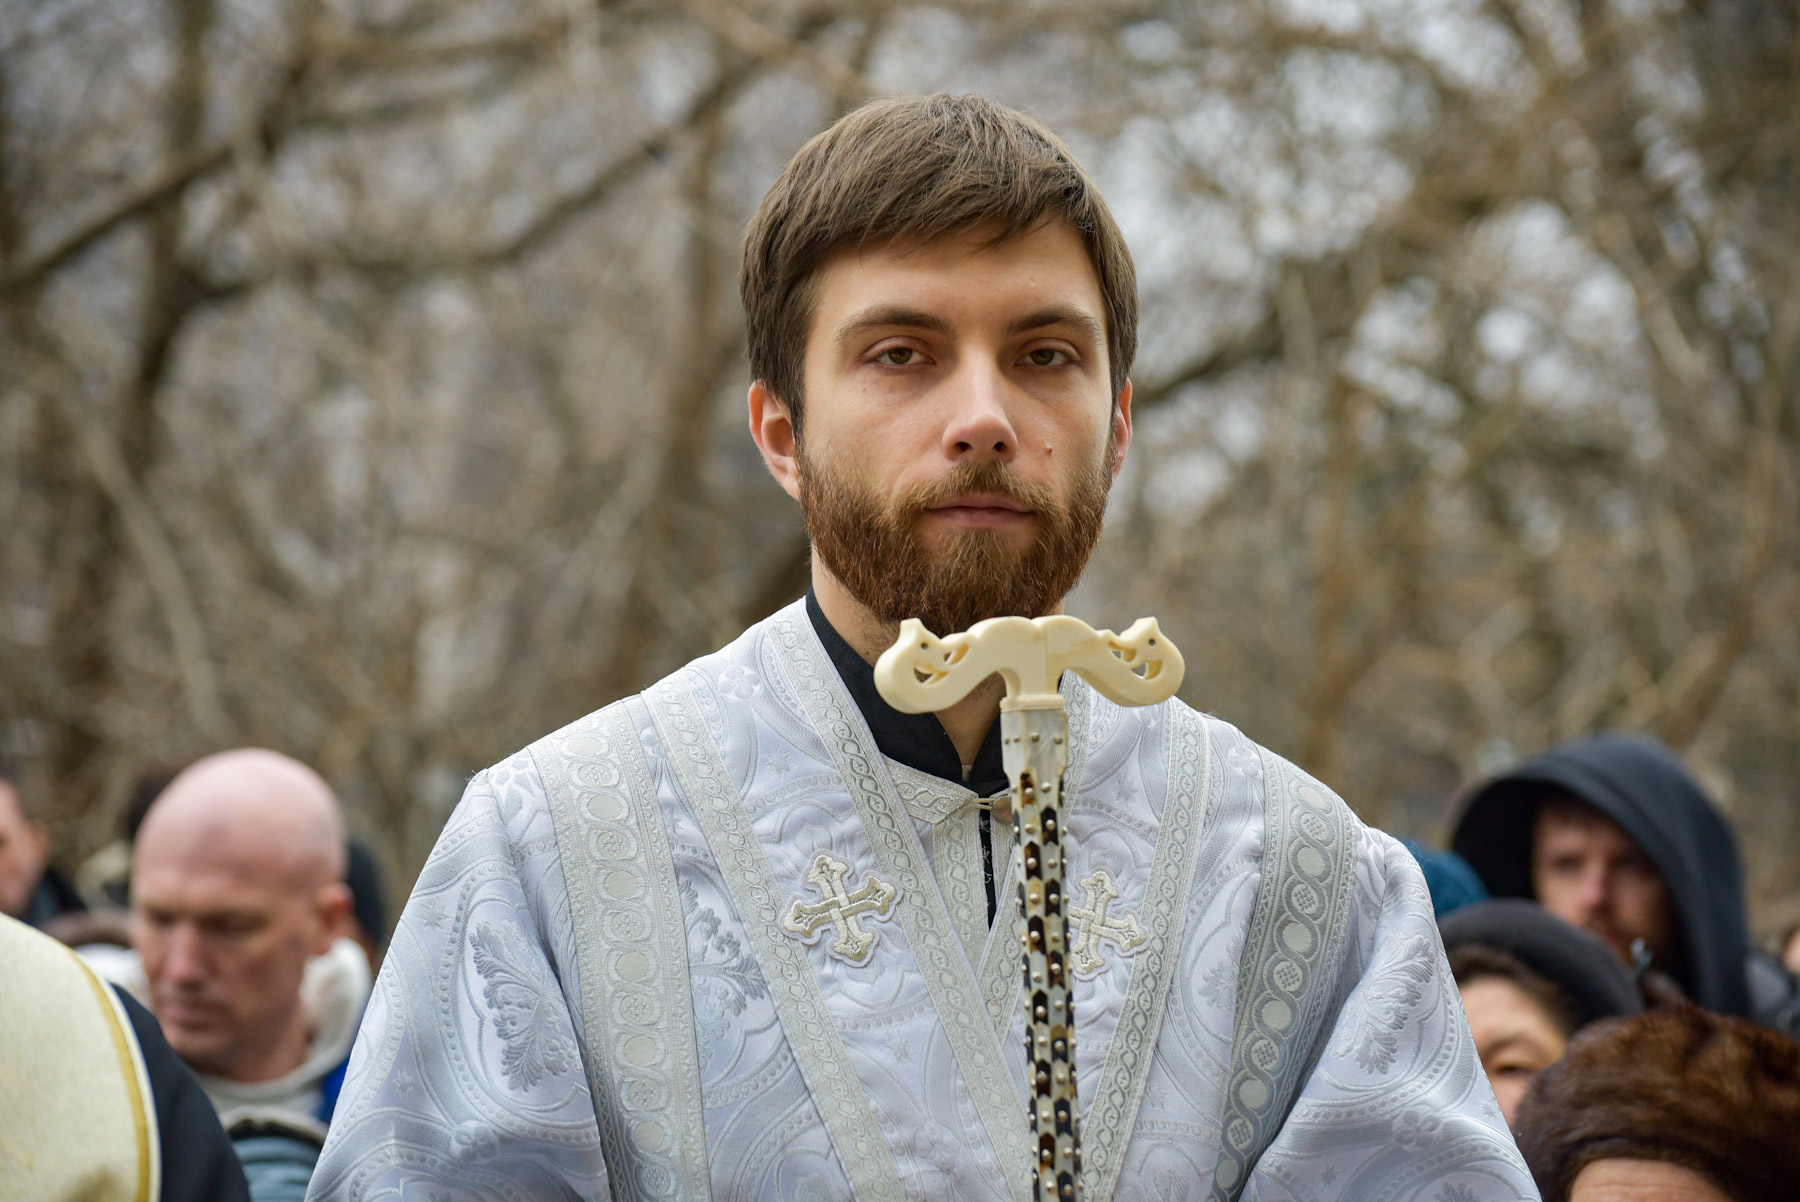 photos of orthodox christmas 0161 1